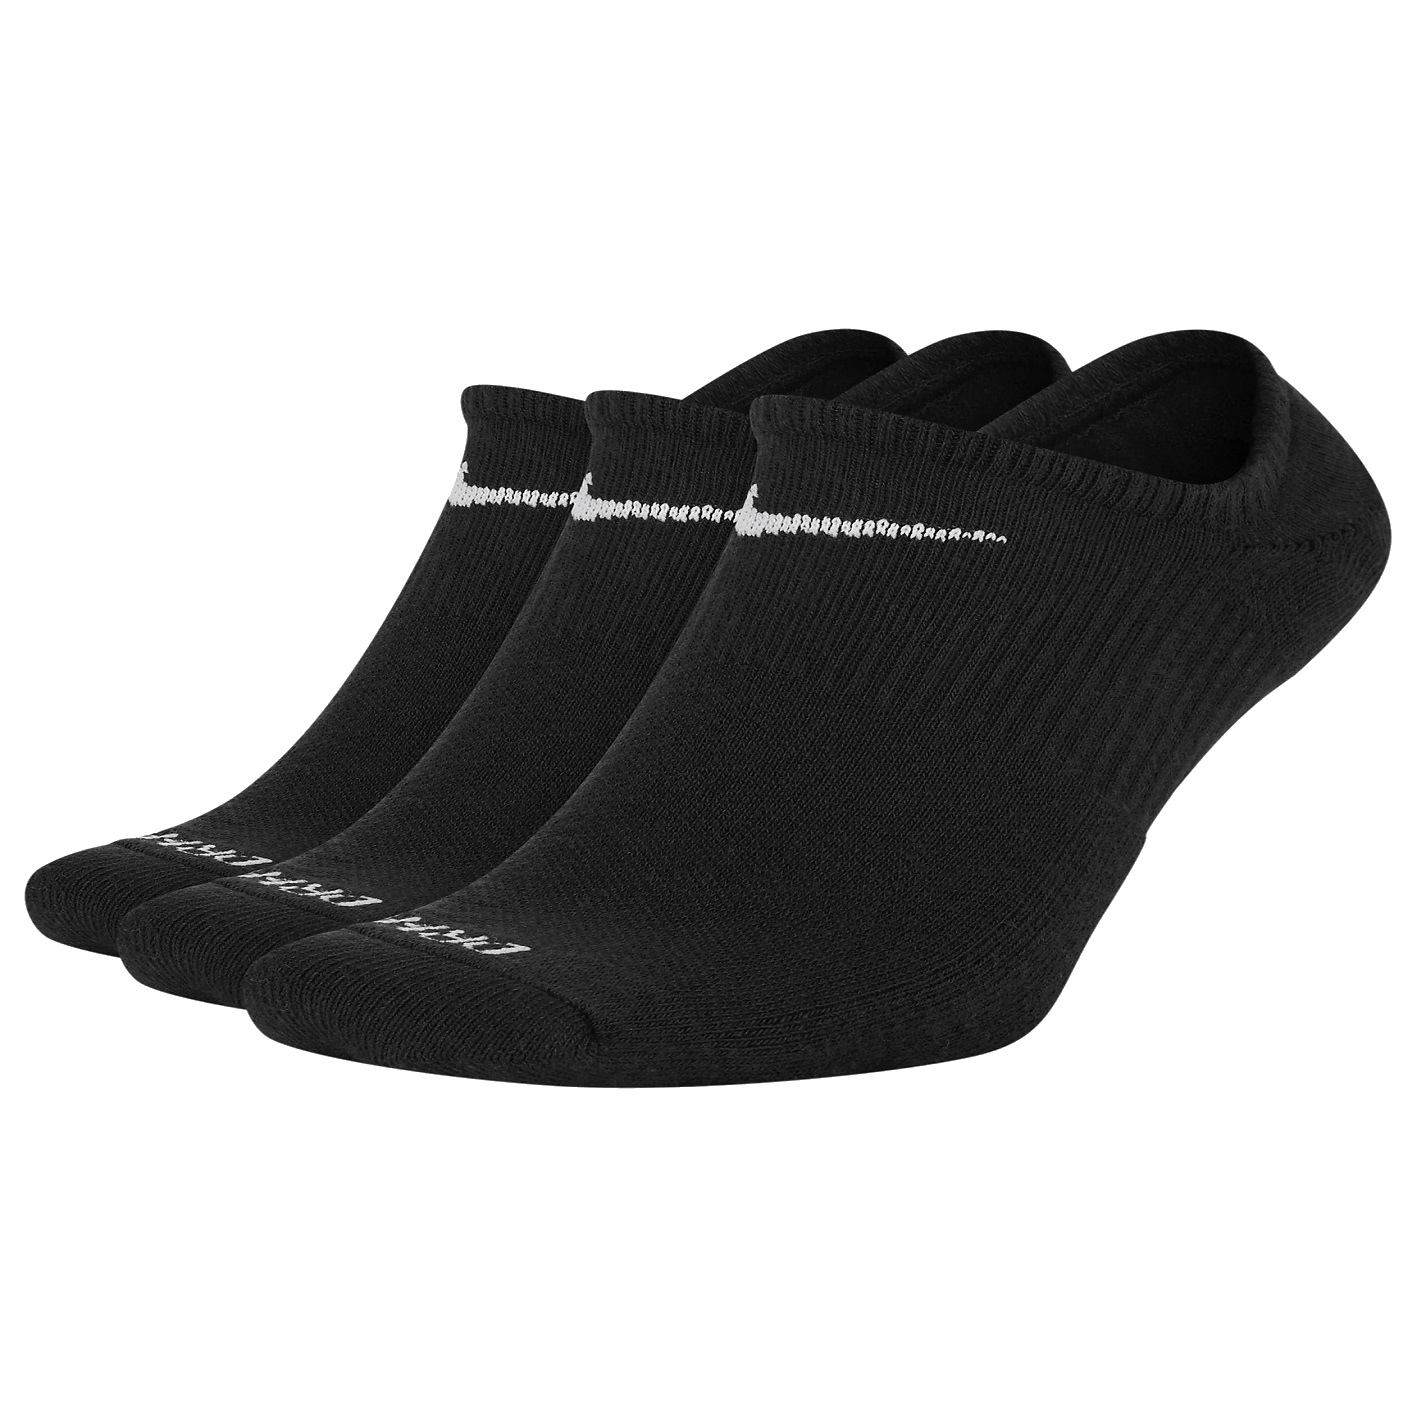 ☆ Nike Everyday Plus Cushioned Dri-Fit Socken 3er Pack schwarz - hier  bestellen!